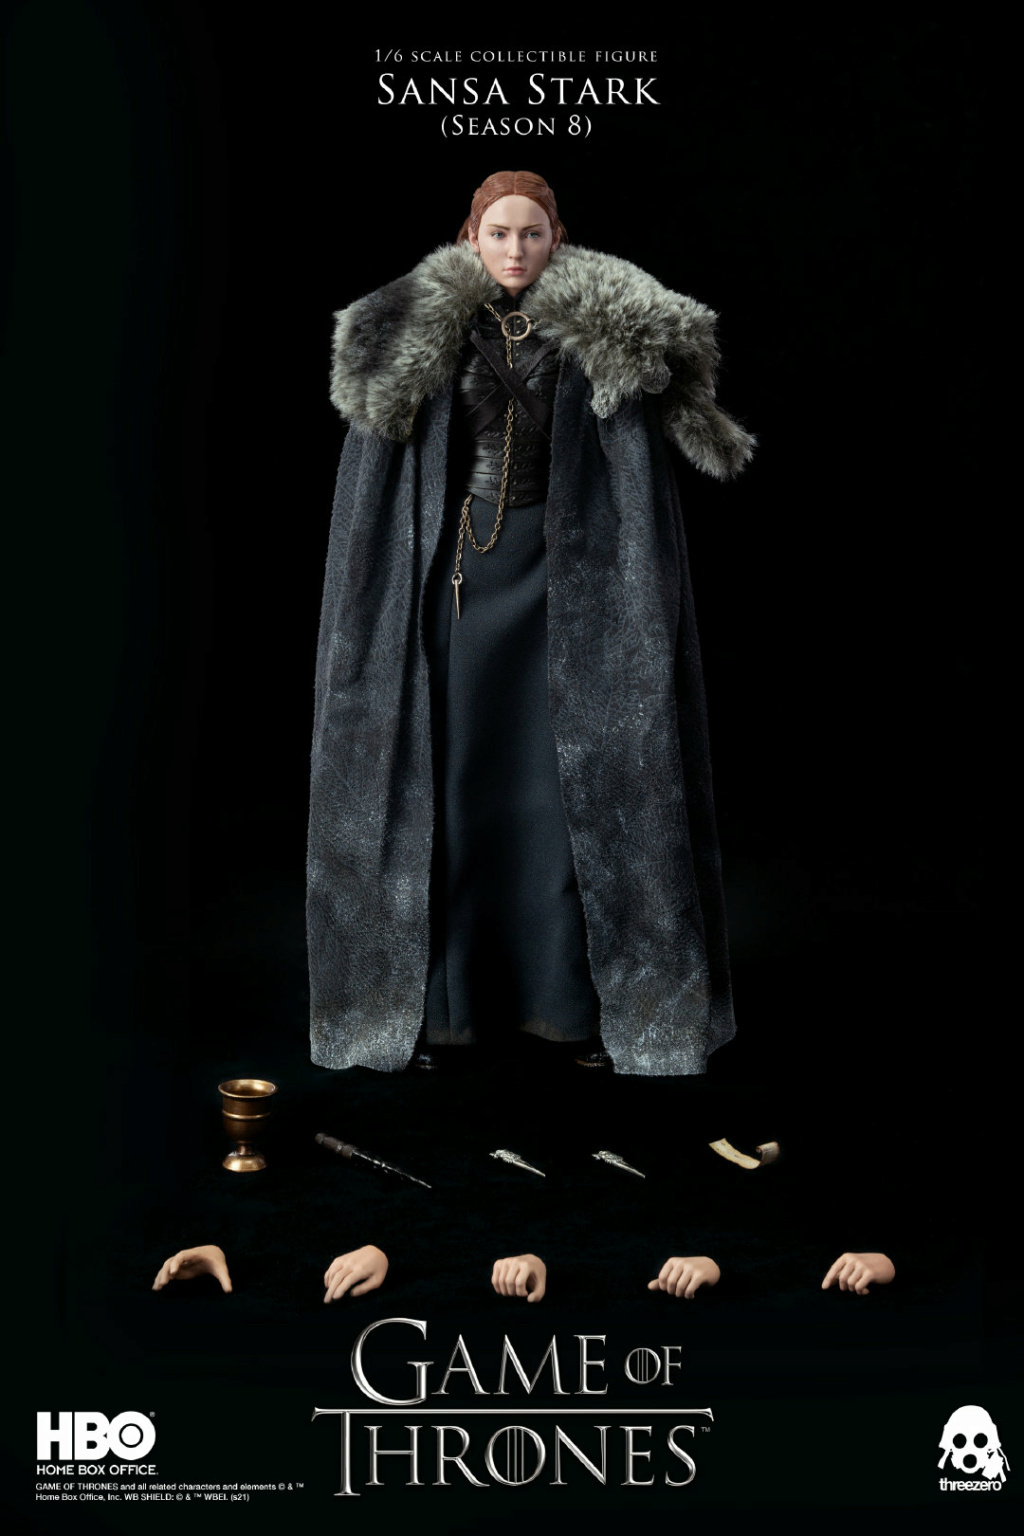 NEW PRODUCT: Threezero: 1/6 "A Song of Ice and Fire: Game of Thrones" Sansa Stark/Sansa Stark Action Figure 10184111